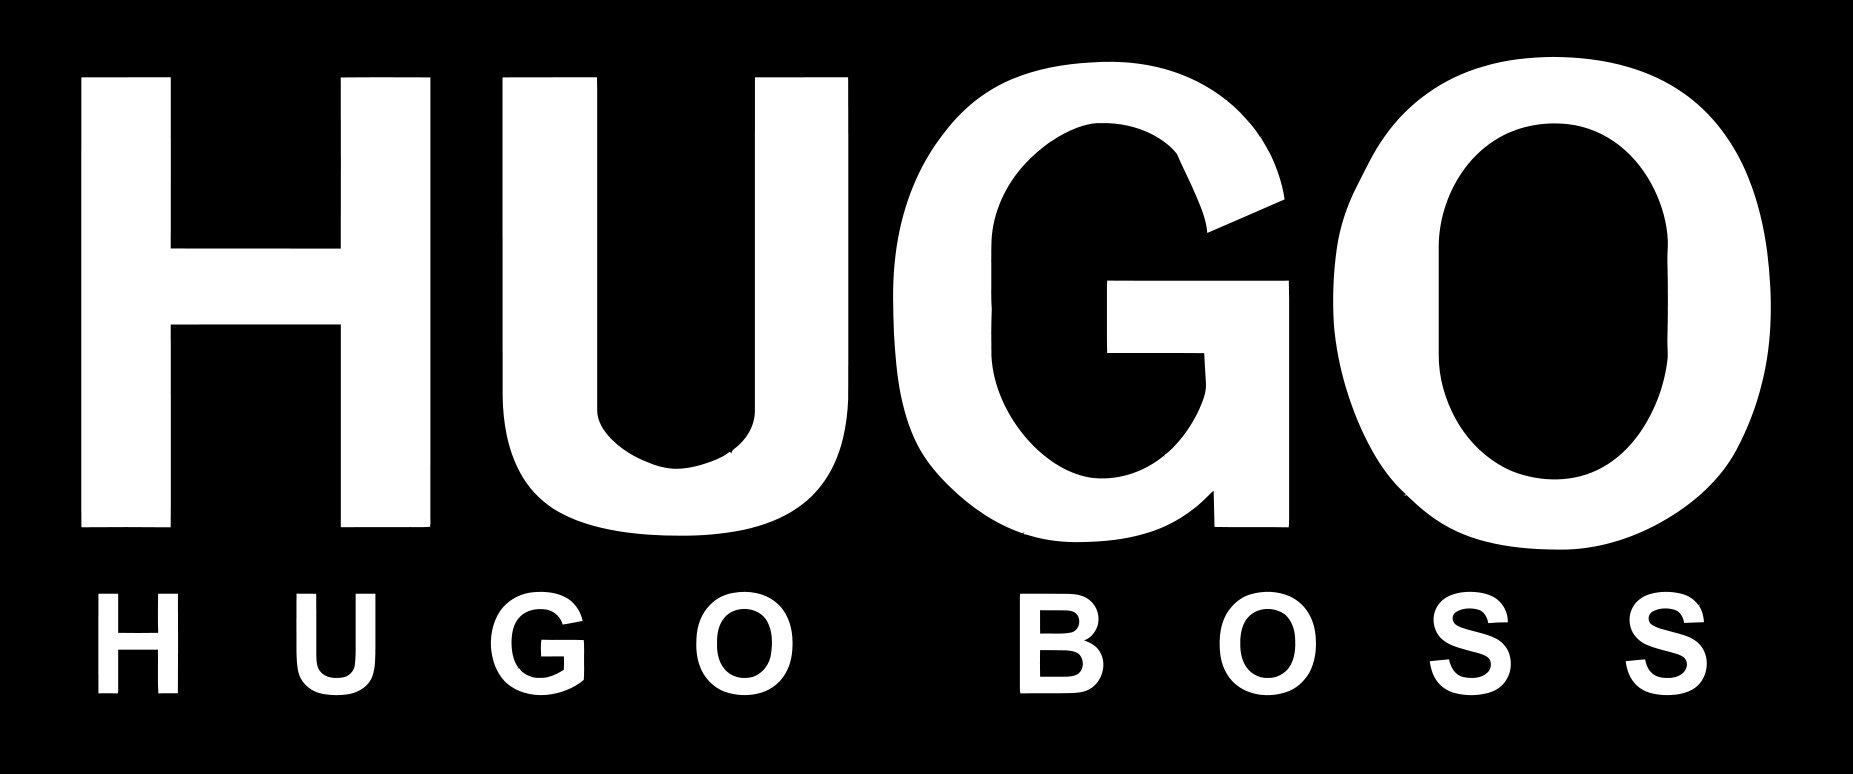 Hugo Boss emblem